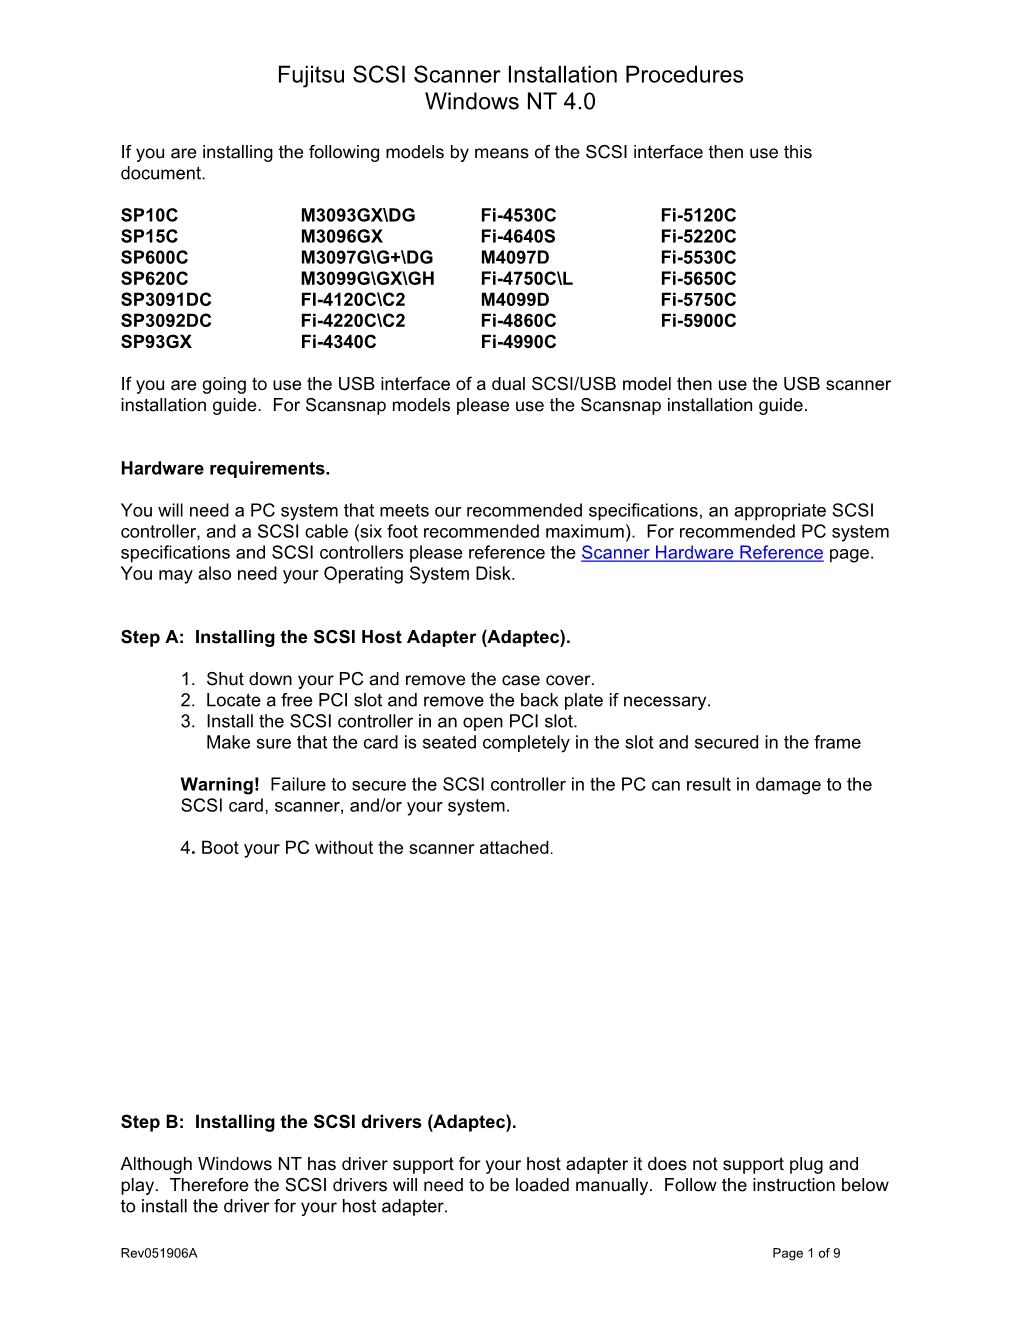 Fujitsu SCSI Scanner Installation Procedures Windows NT 4.0